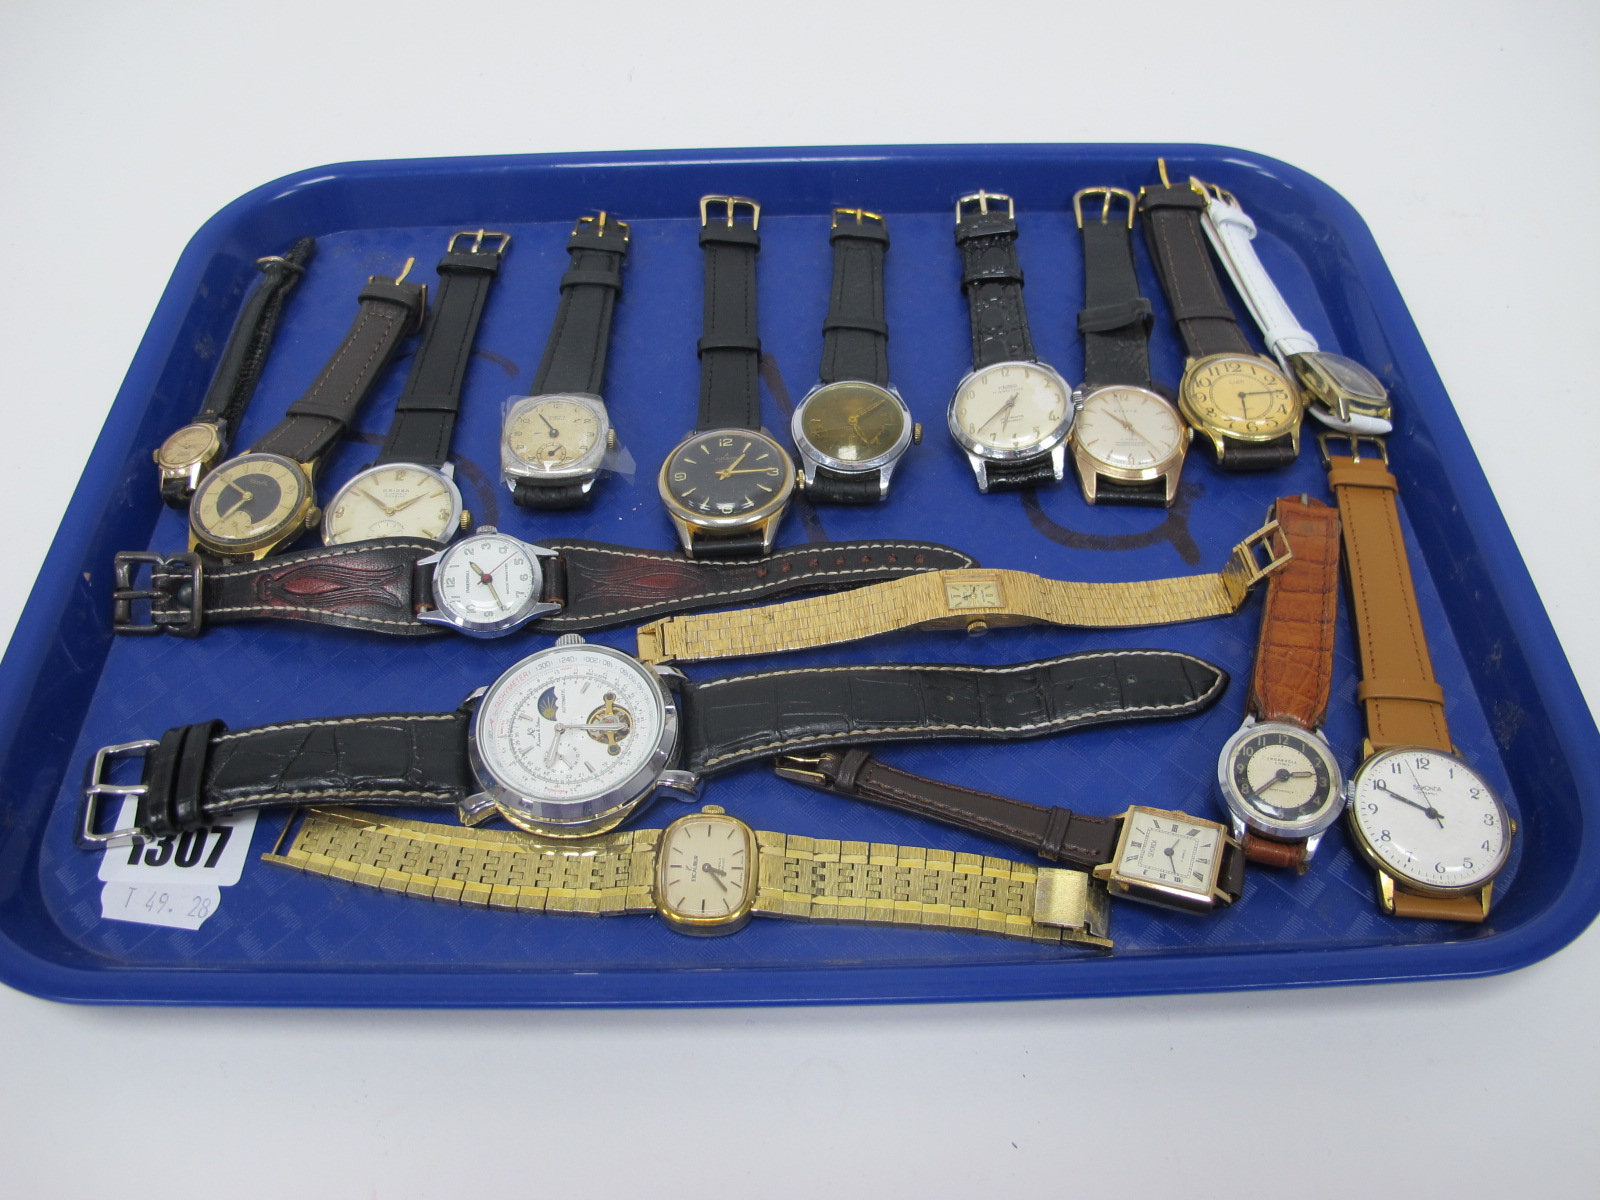 Watches - Mechanical, include Kronen & Sohne, Kered, Stayte, Oriosa, Josmar, Ingersoll. (15)